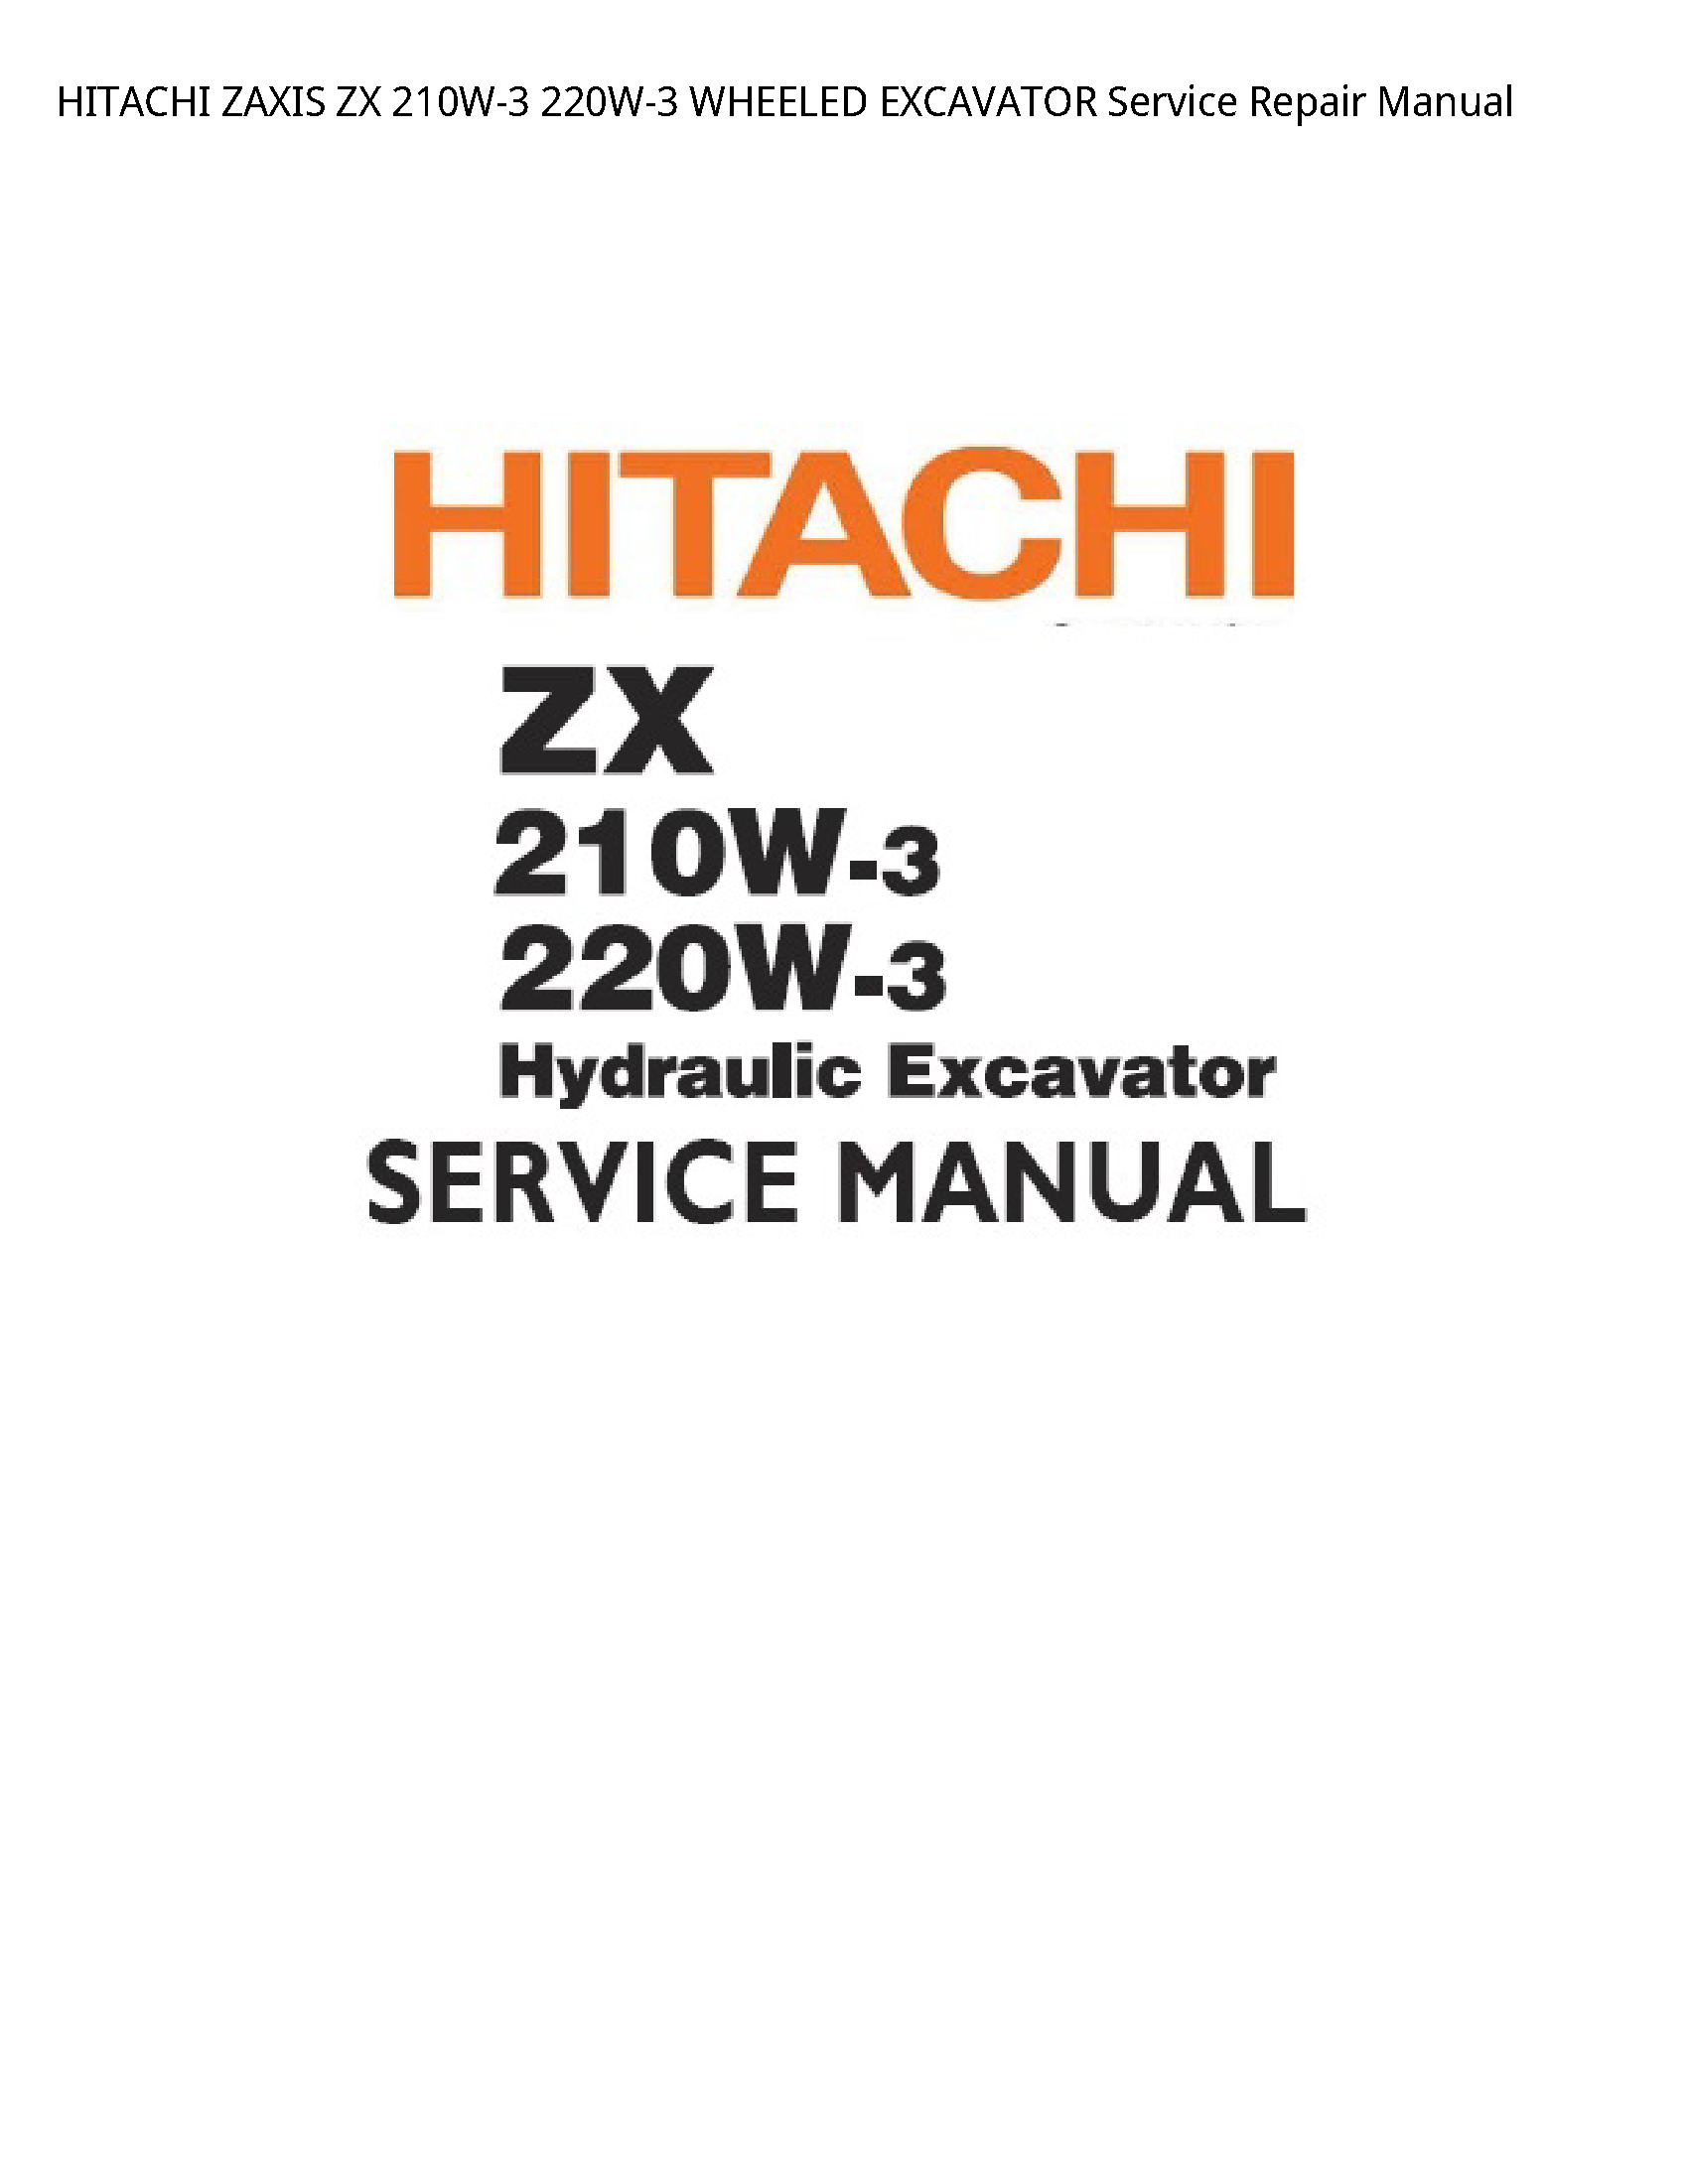 Hitachi 210W-3 ZAXIS ZX WHEELED EXCAVATOR manual